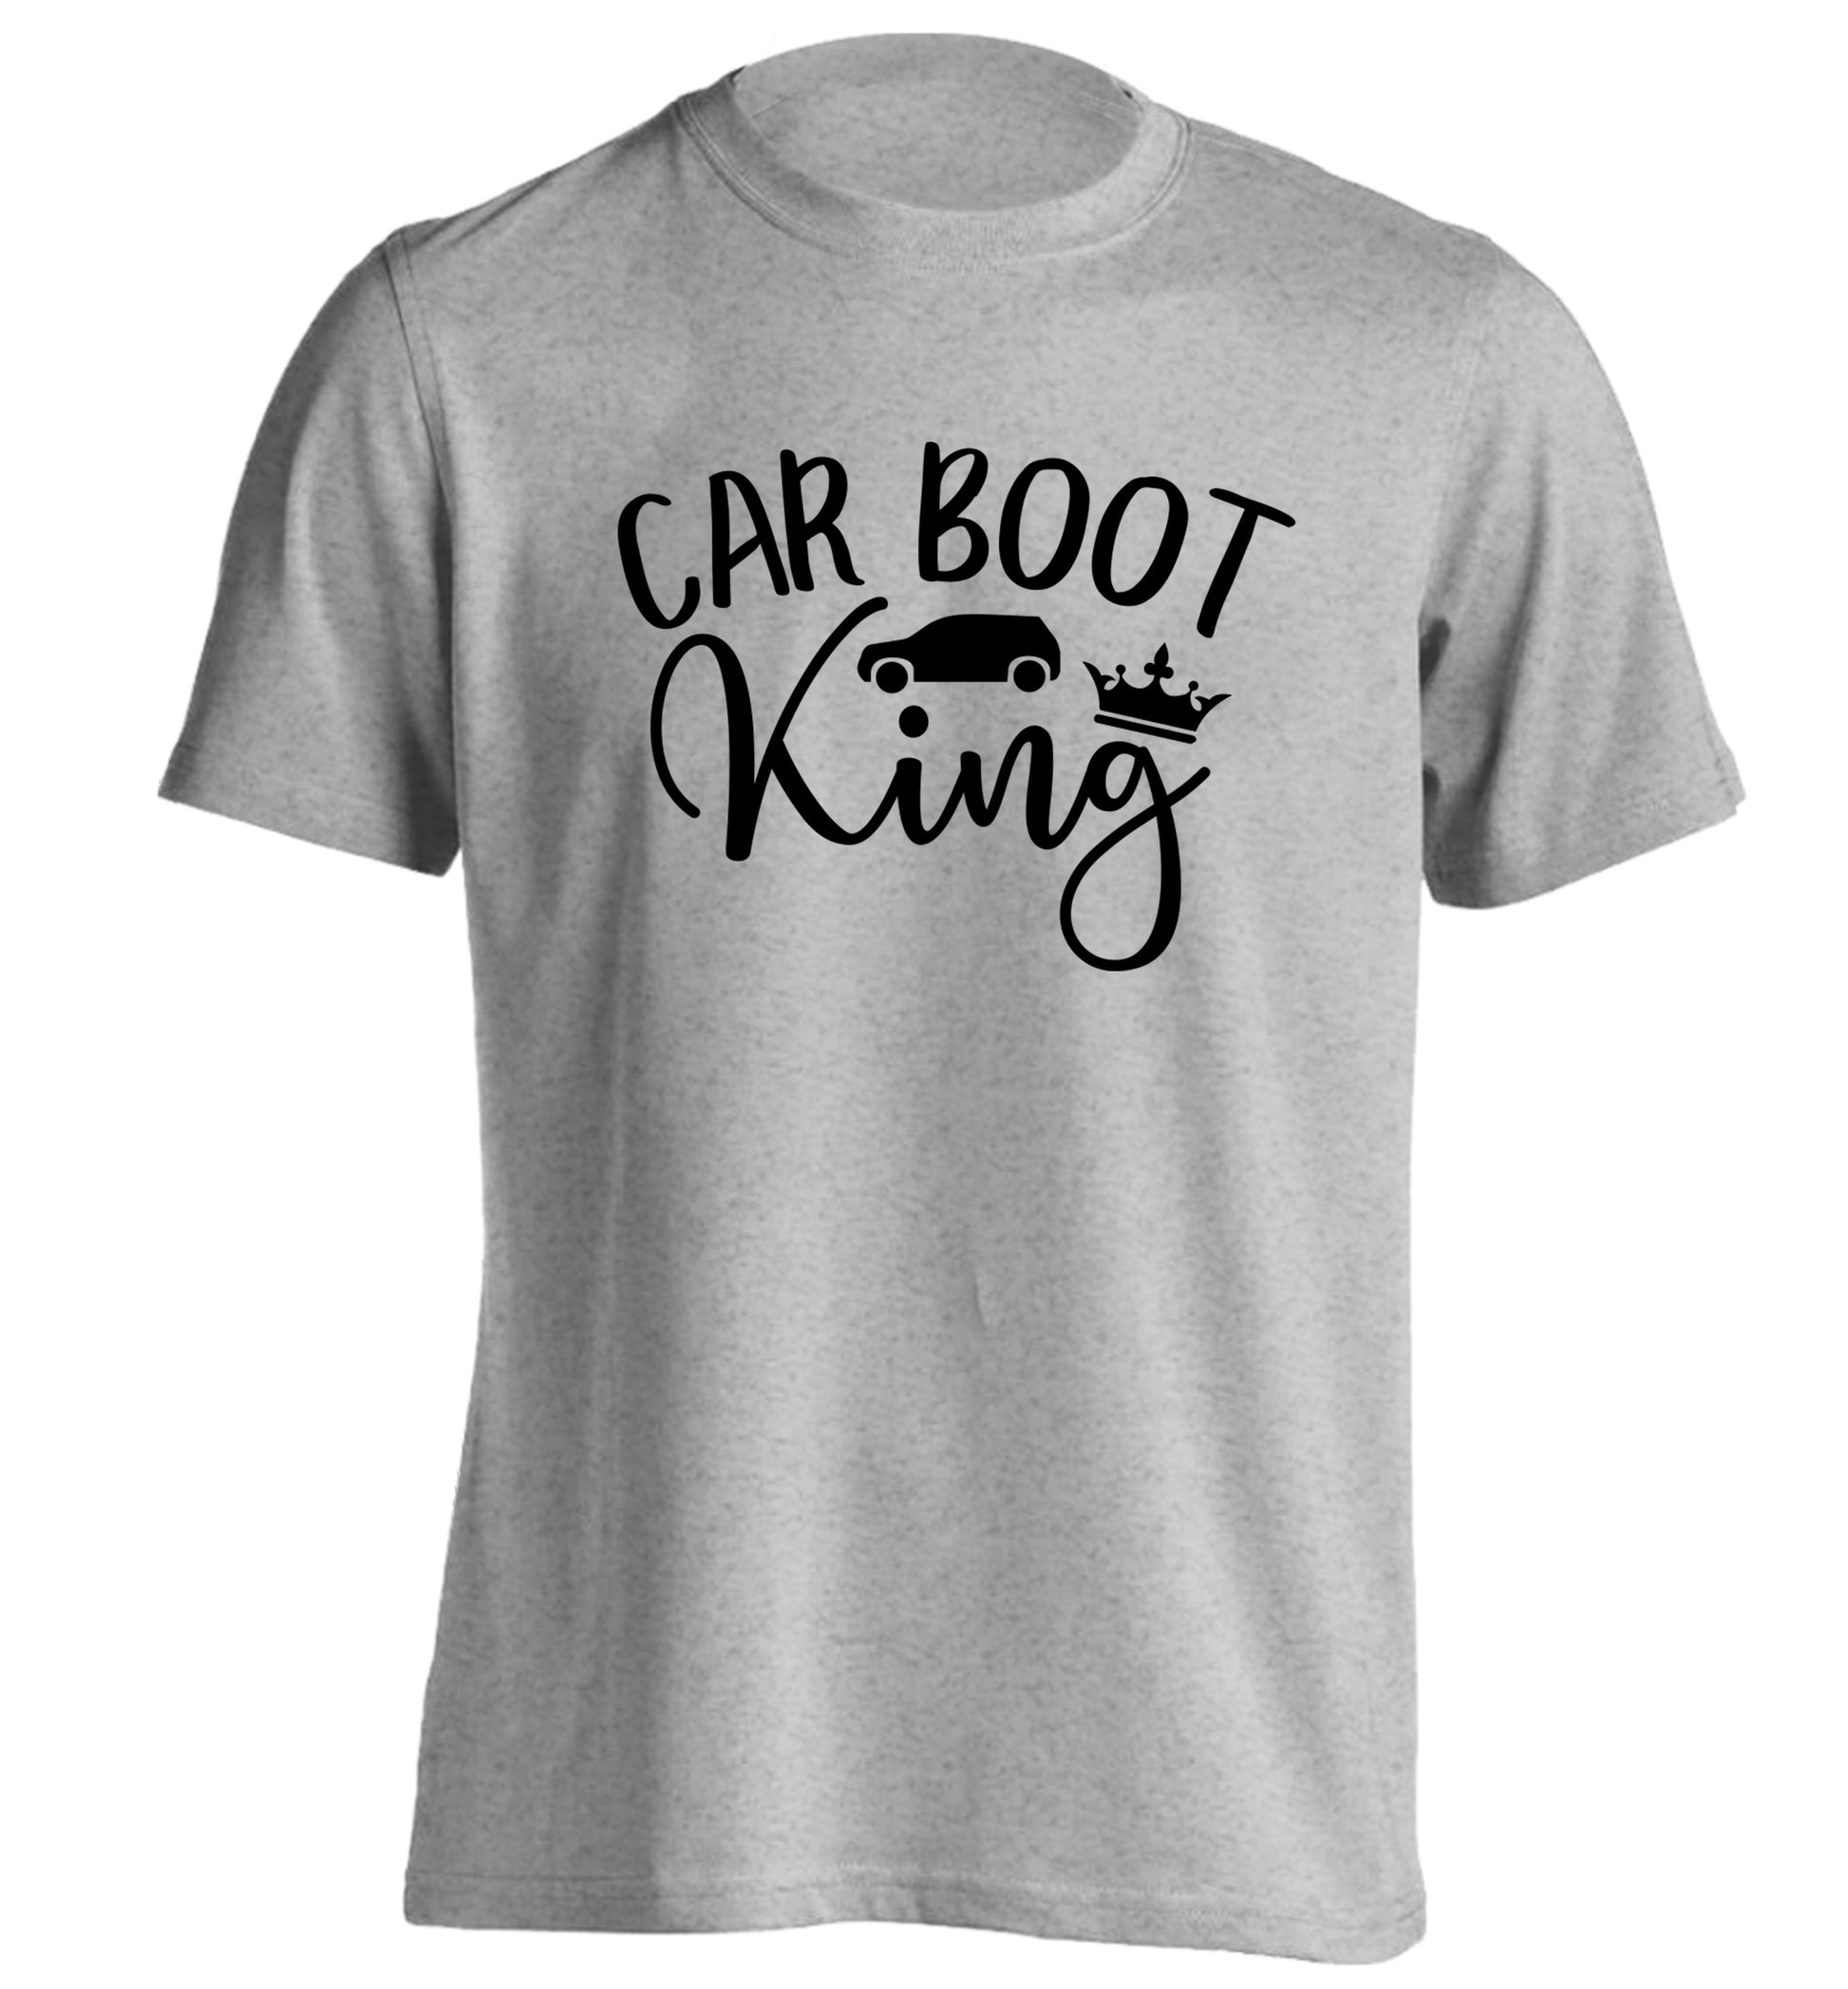 Carboot King adults unisex grey Tshirt 2XL